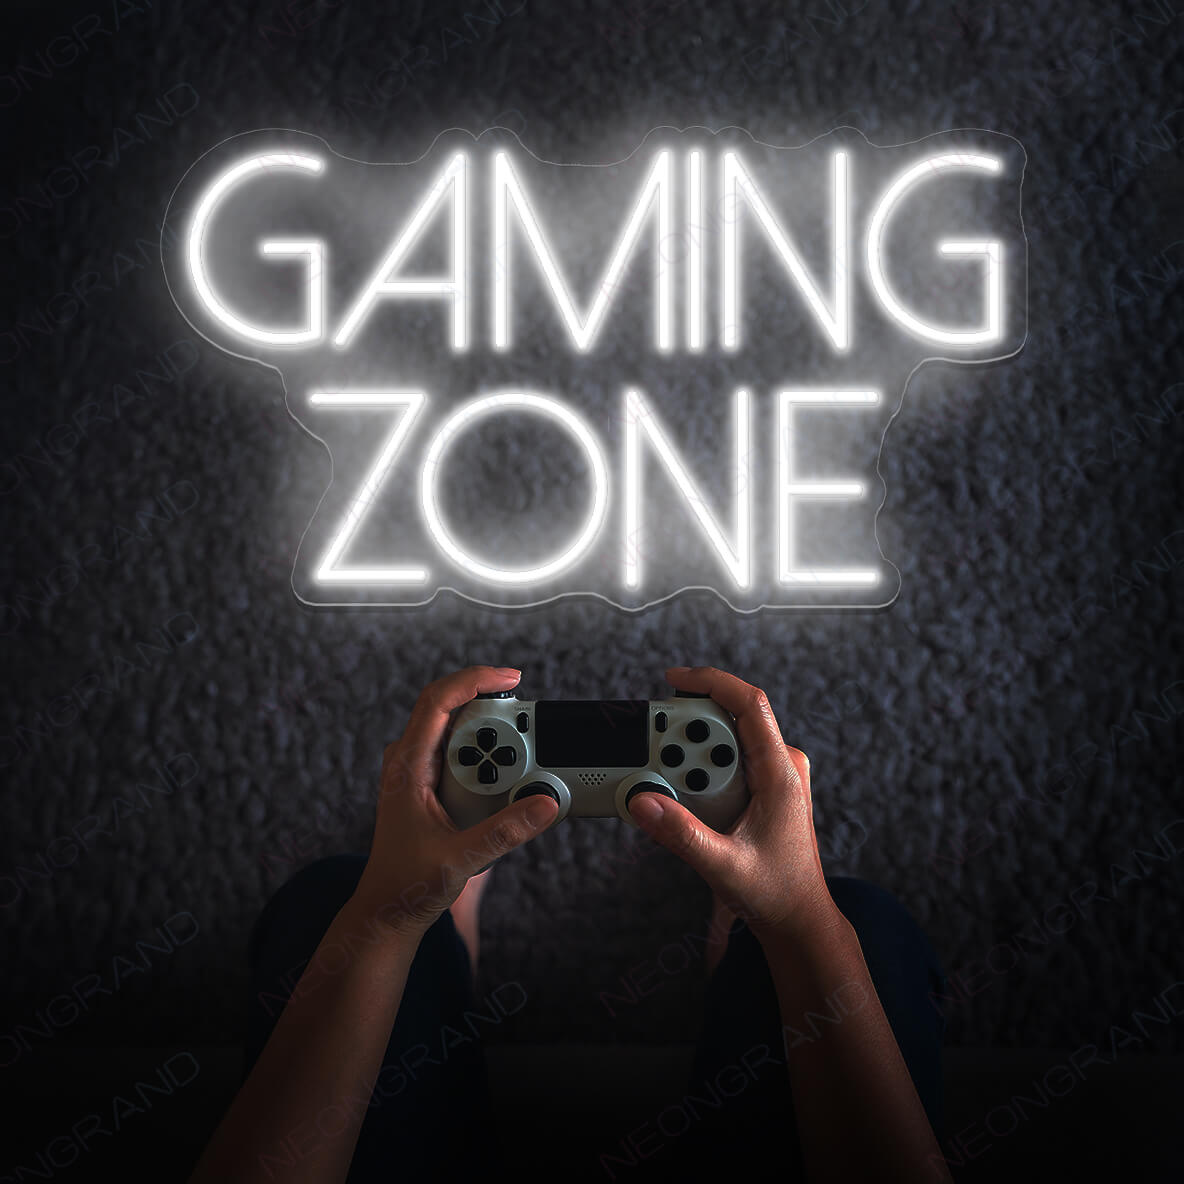 Gaming Zone Neon Sign Game Room Led Light white